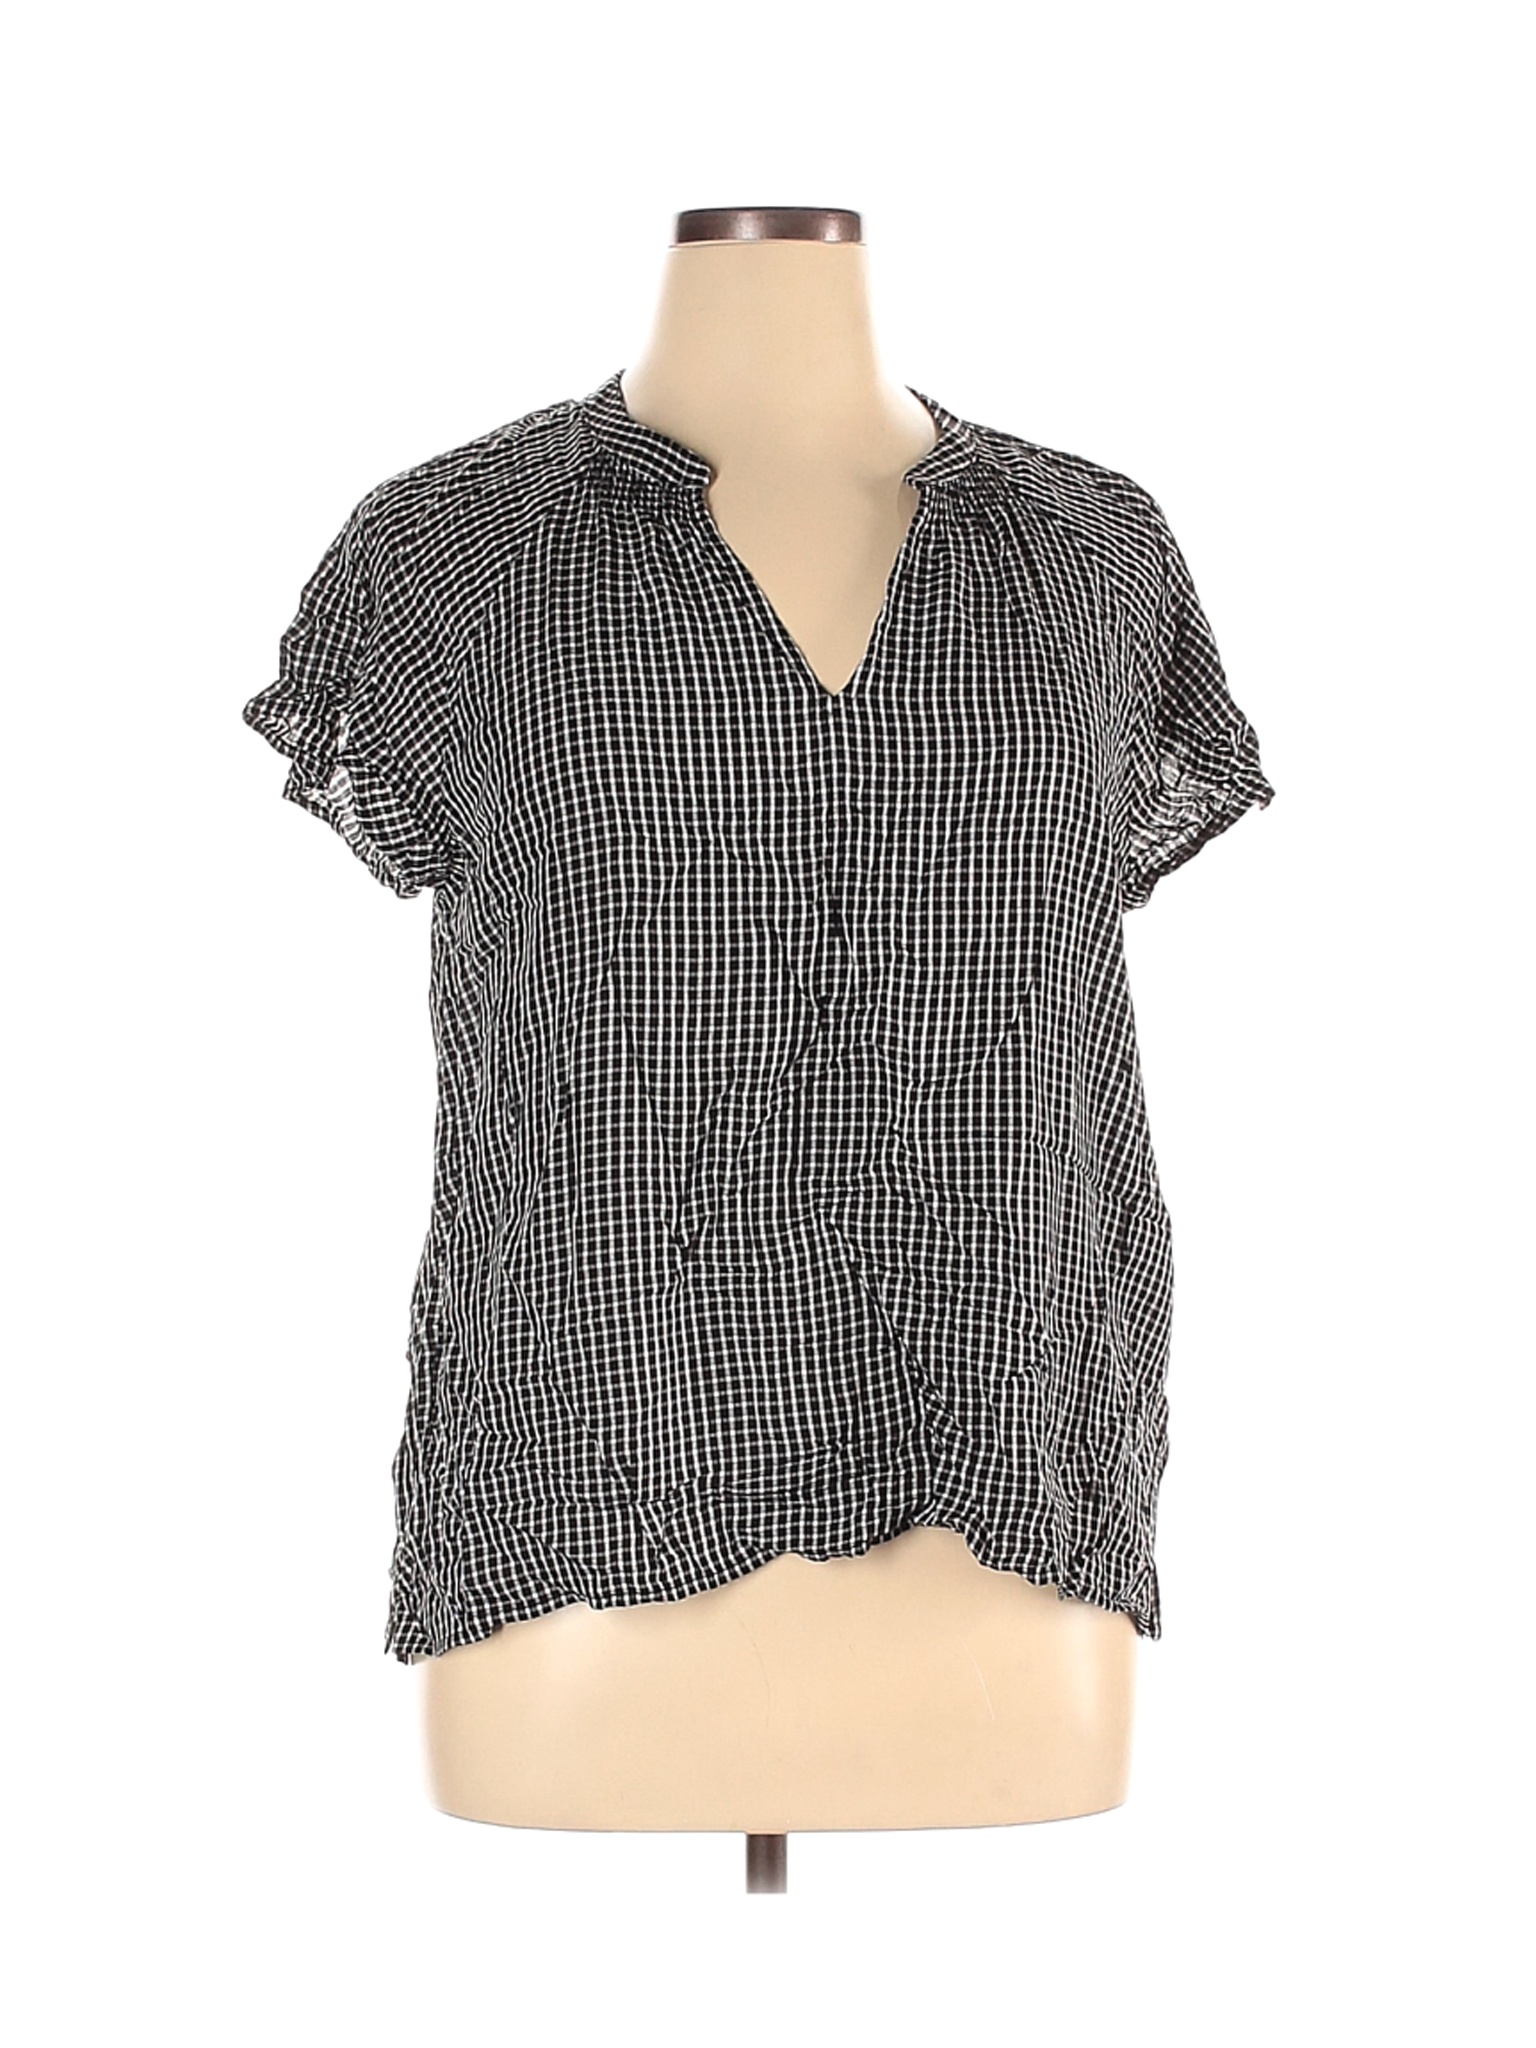 Old Navy Women Black Short Sleeve Blouse XL | eBay